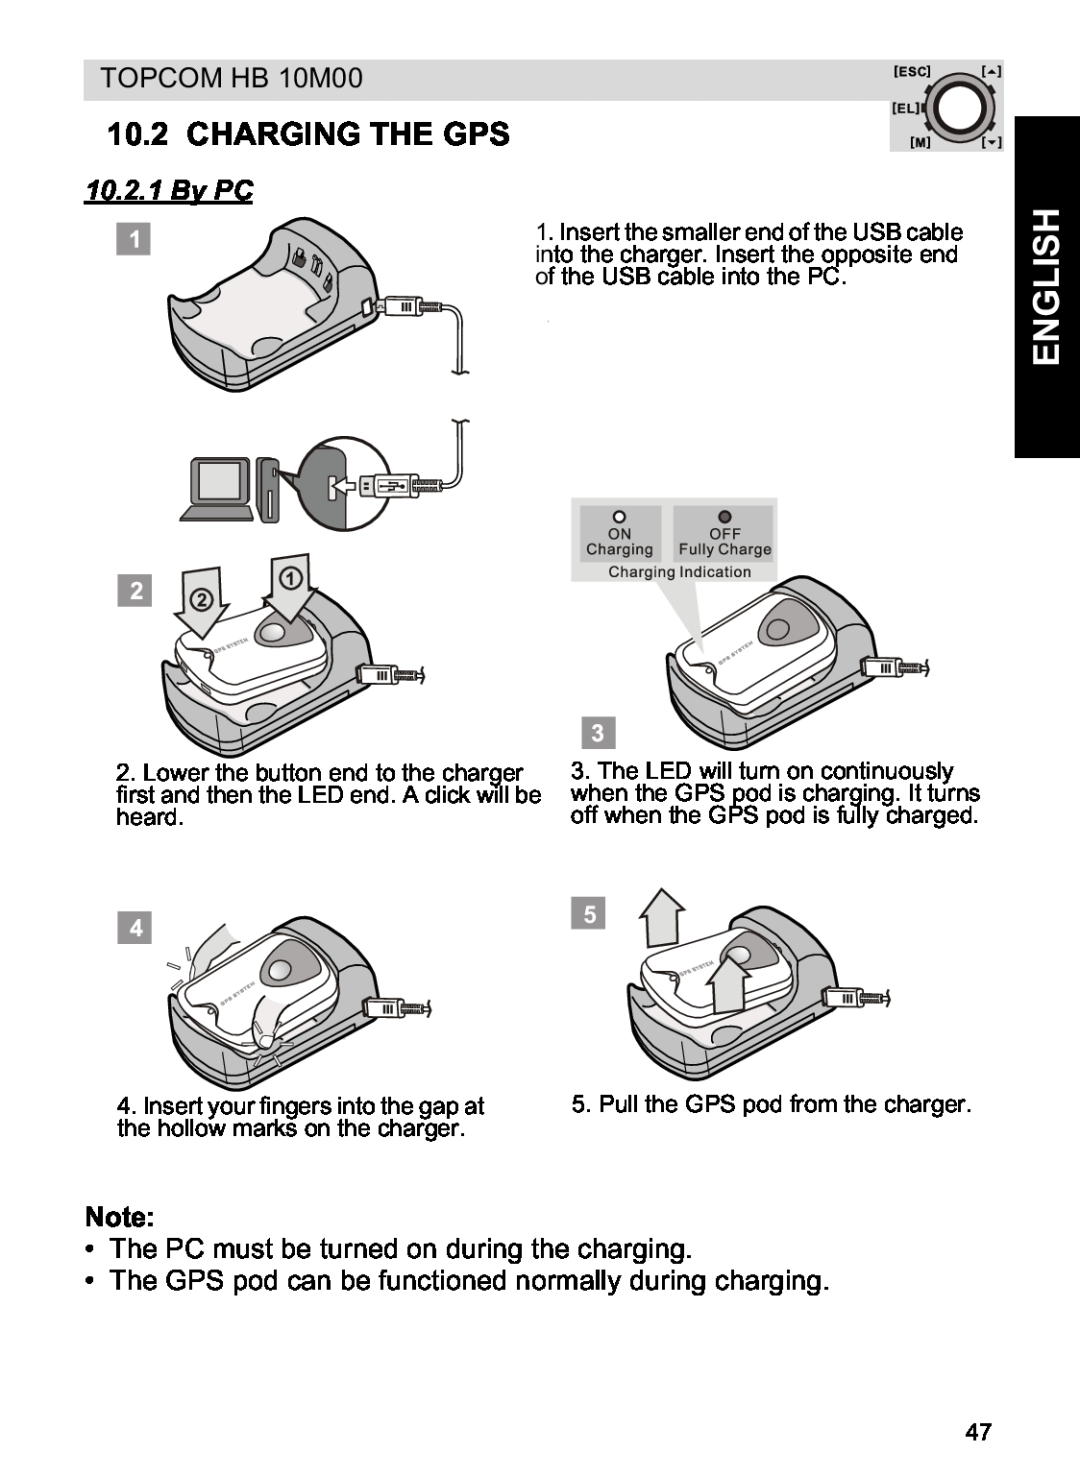 Topcom HB 10M00 manual Charging The Gps, By PC, English 